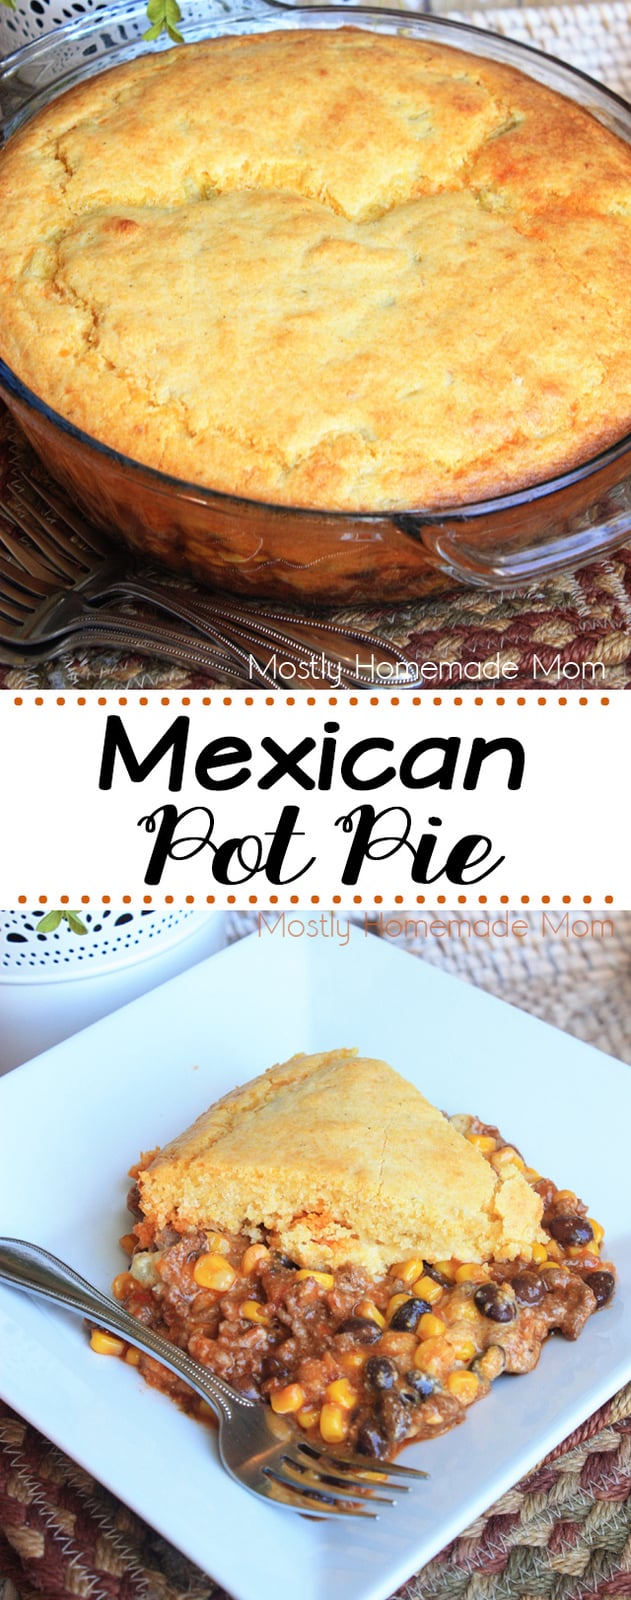 Mexican Pot Pie - Mostly Homemade Mom